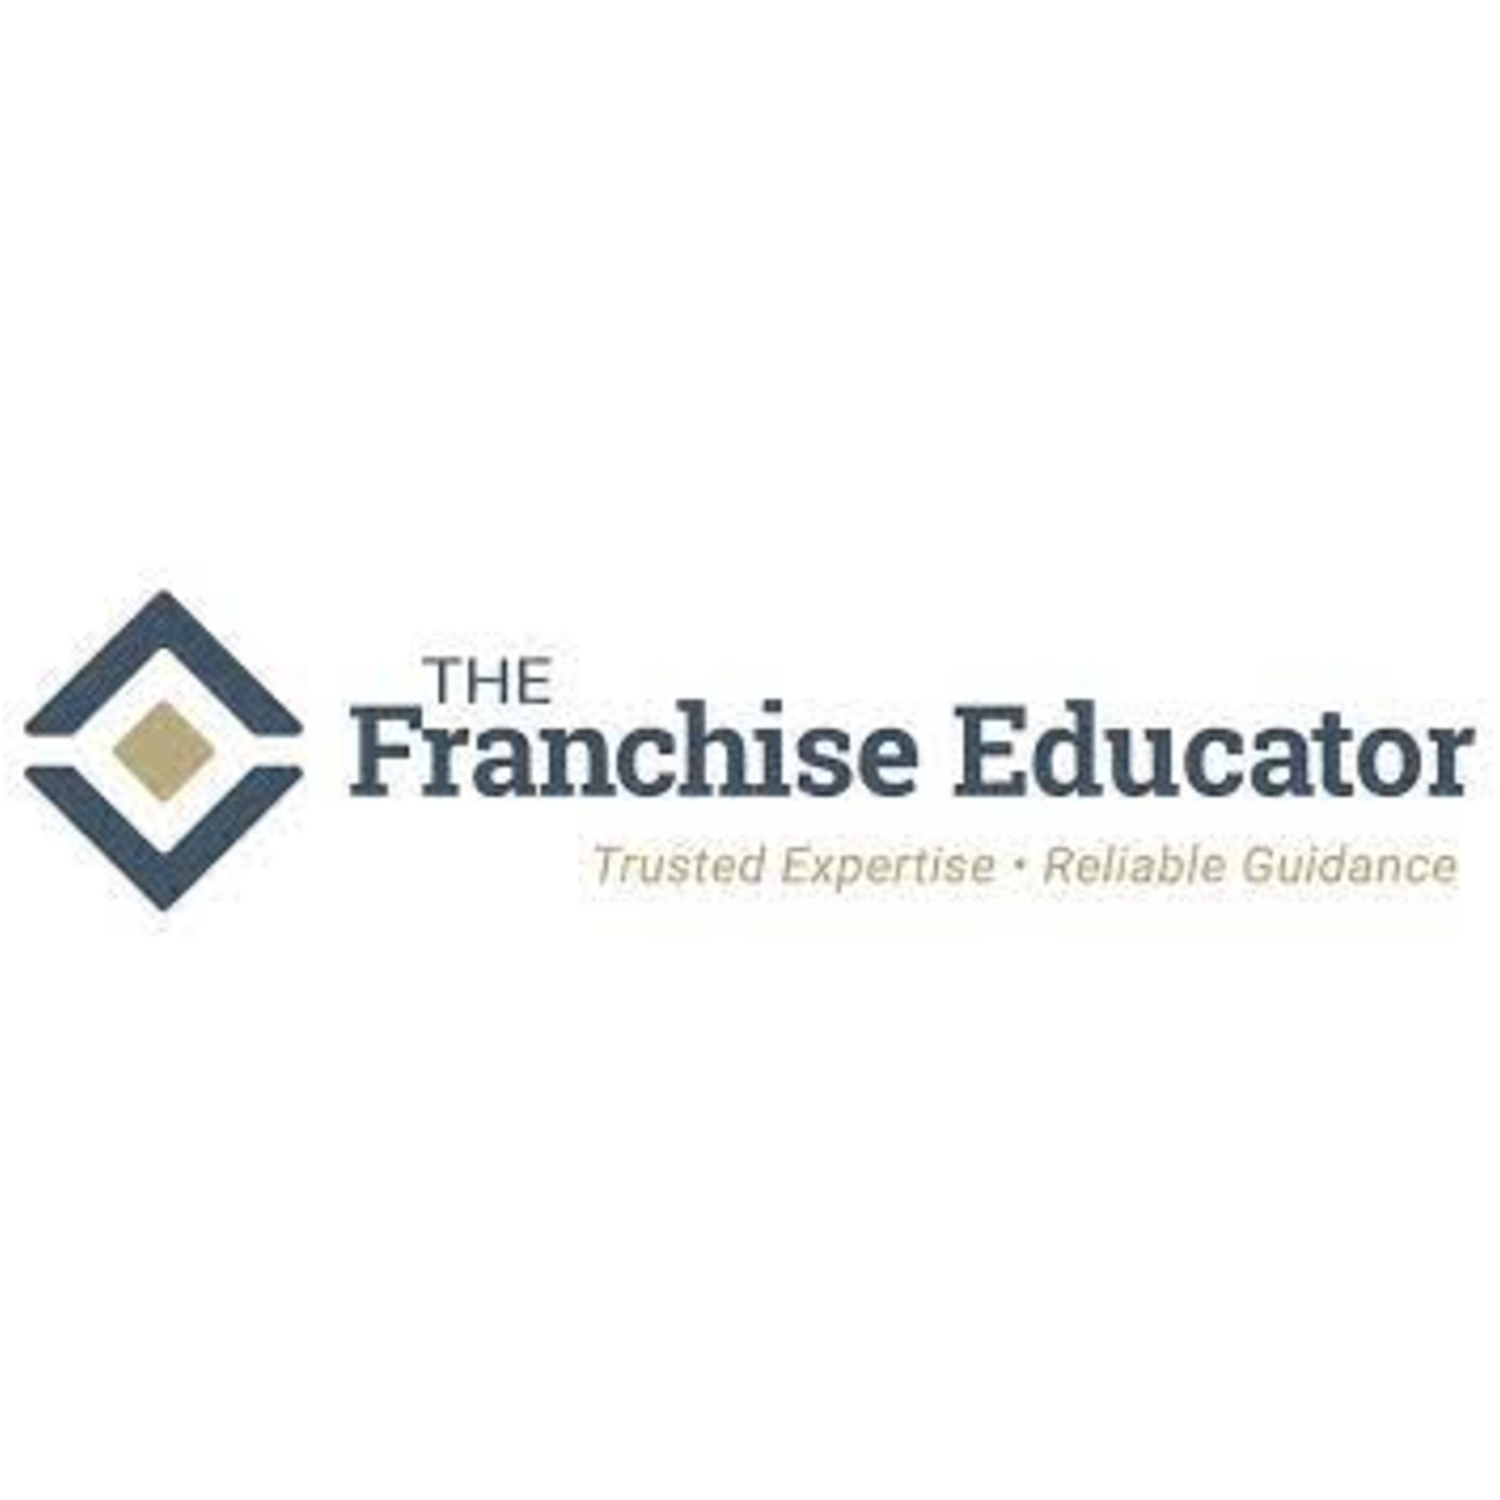 The Franchise Educator